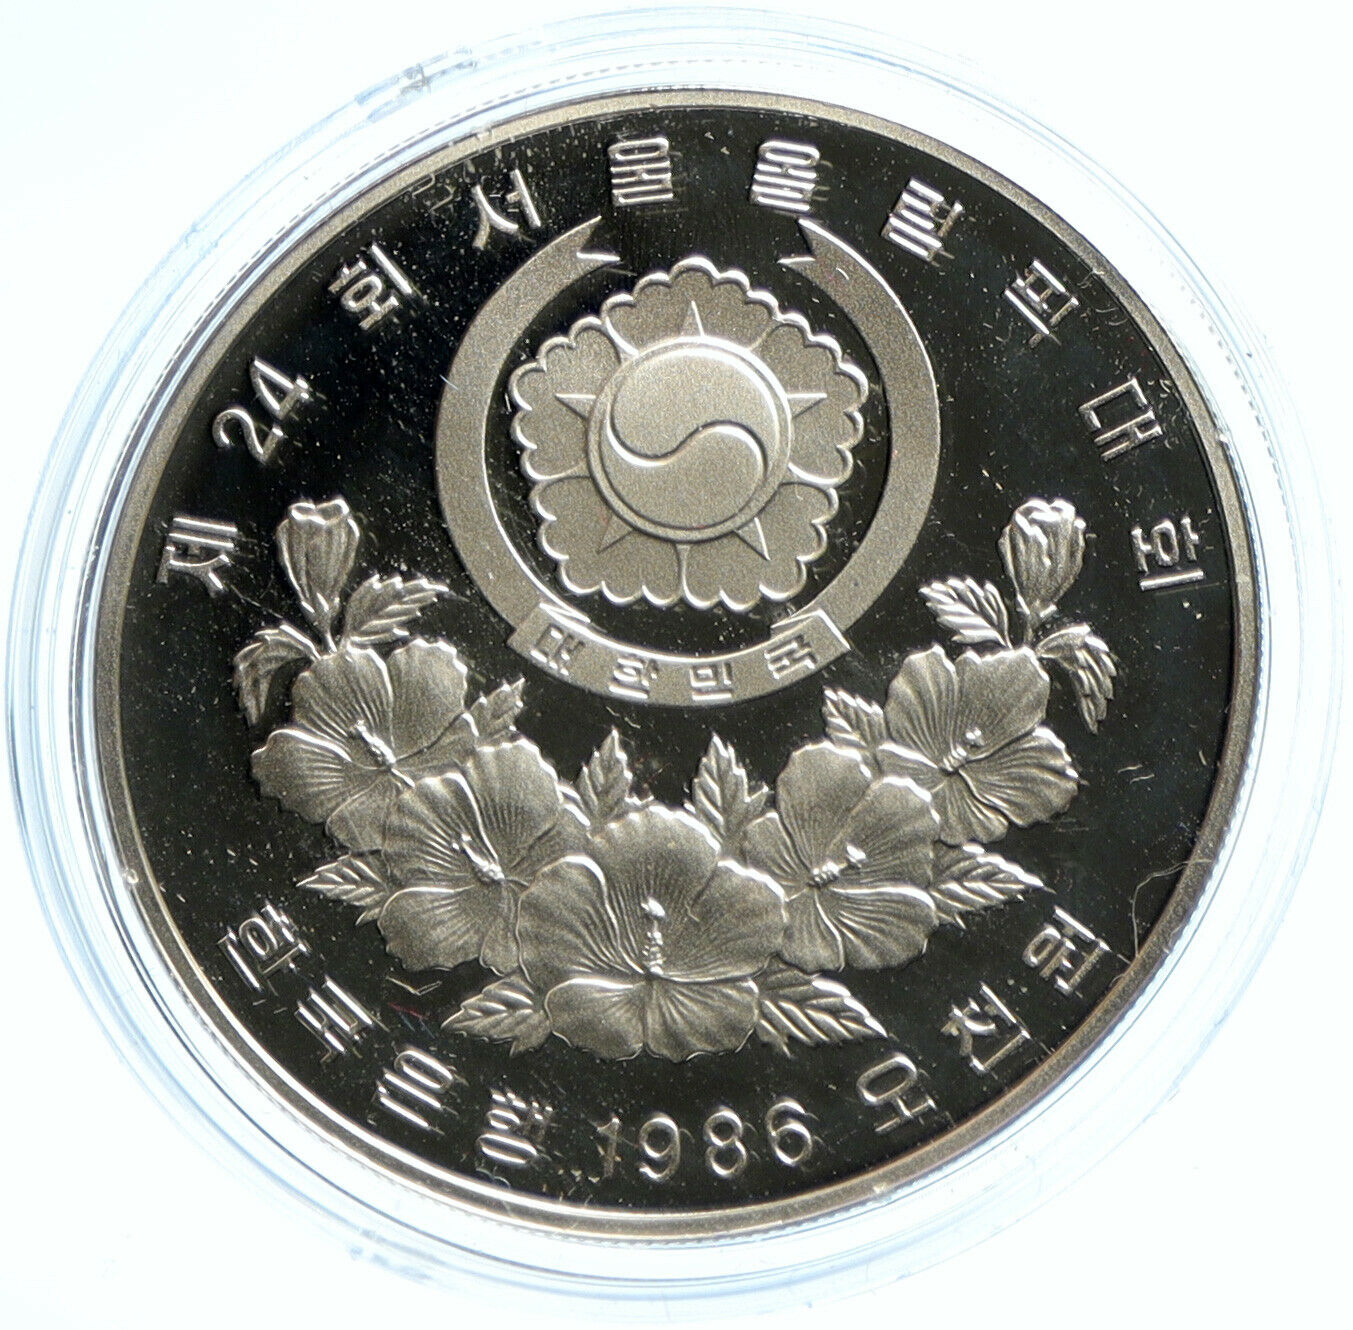 1986 SOUTH KOREA Seoul 1988 OLYMPIC GAMES Tug PROOF Silver 5000 Won Coin i103647